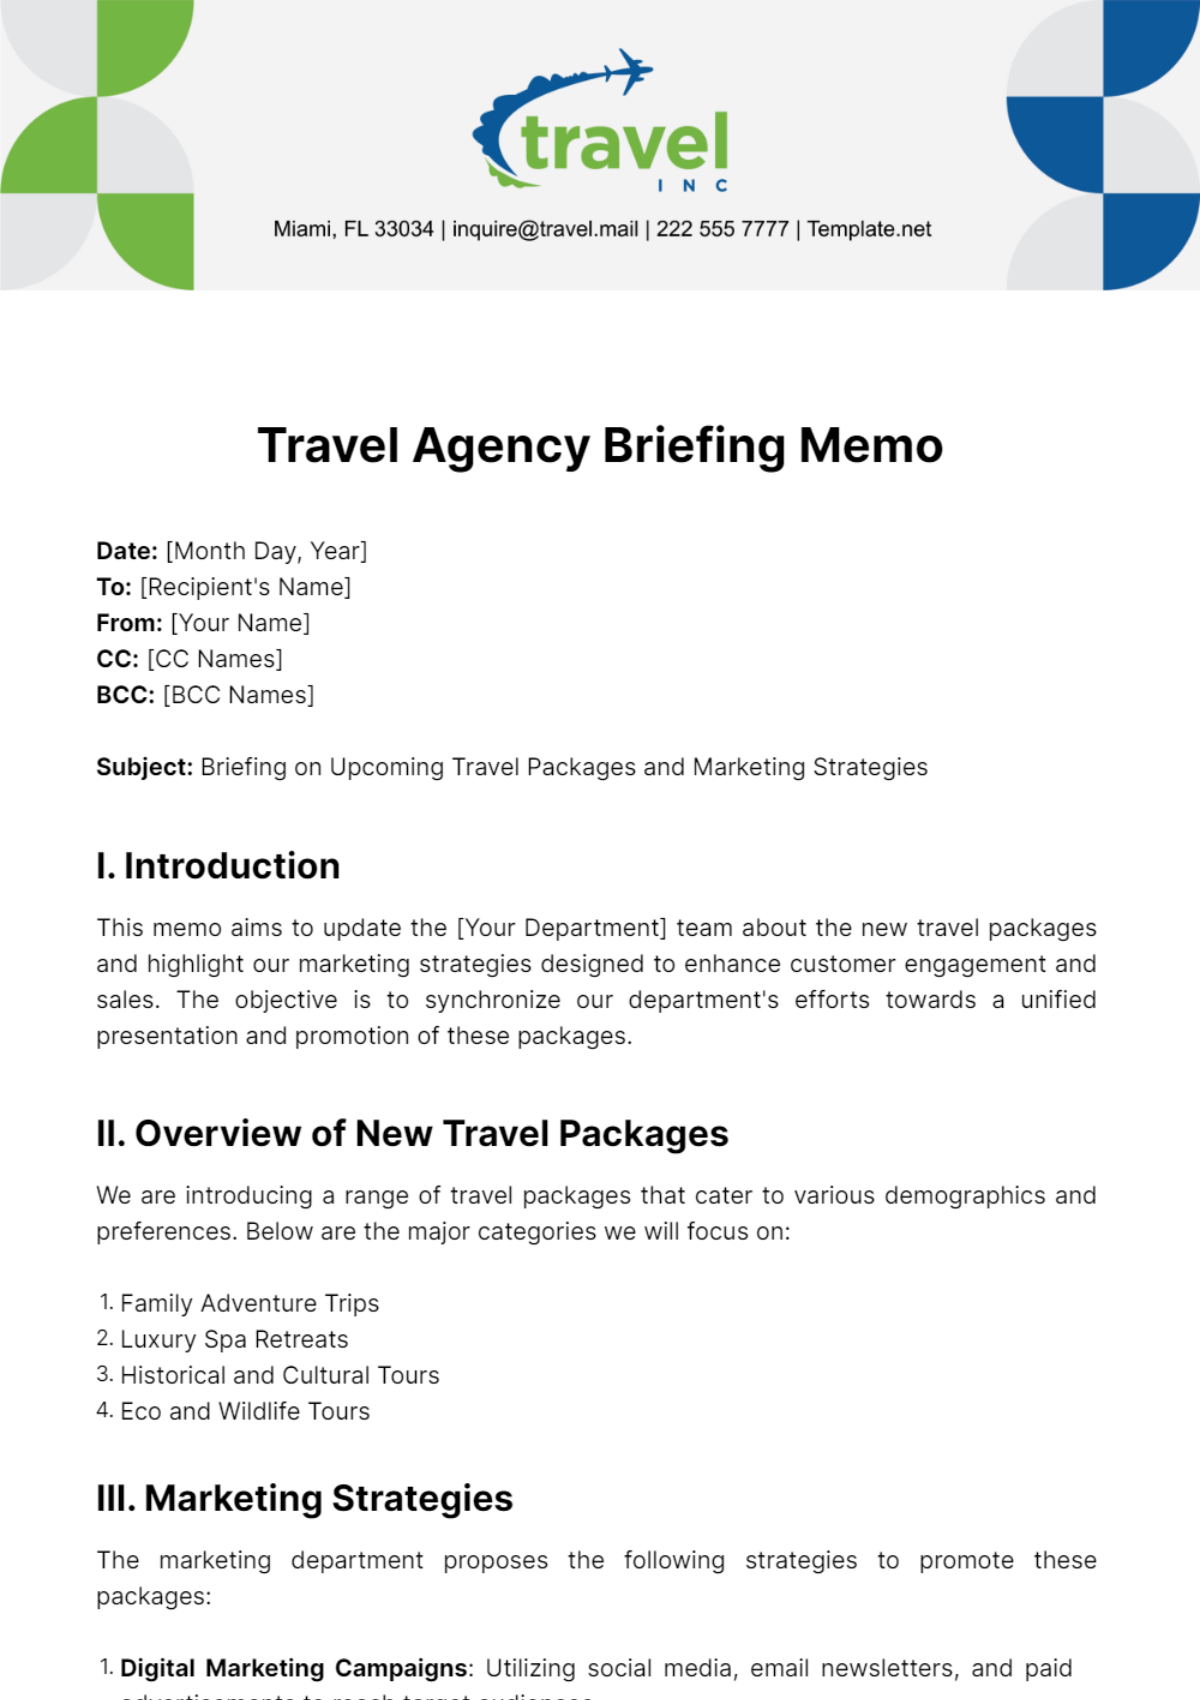 Travel Agency Briefing Memo Template